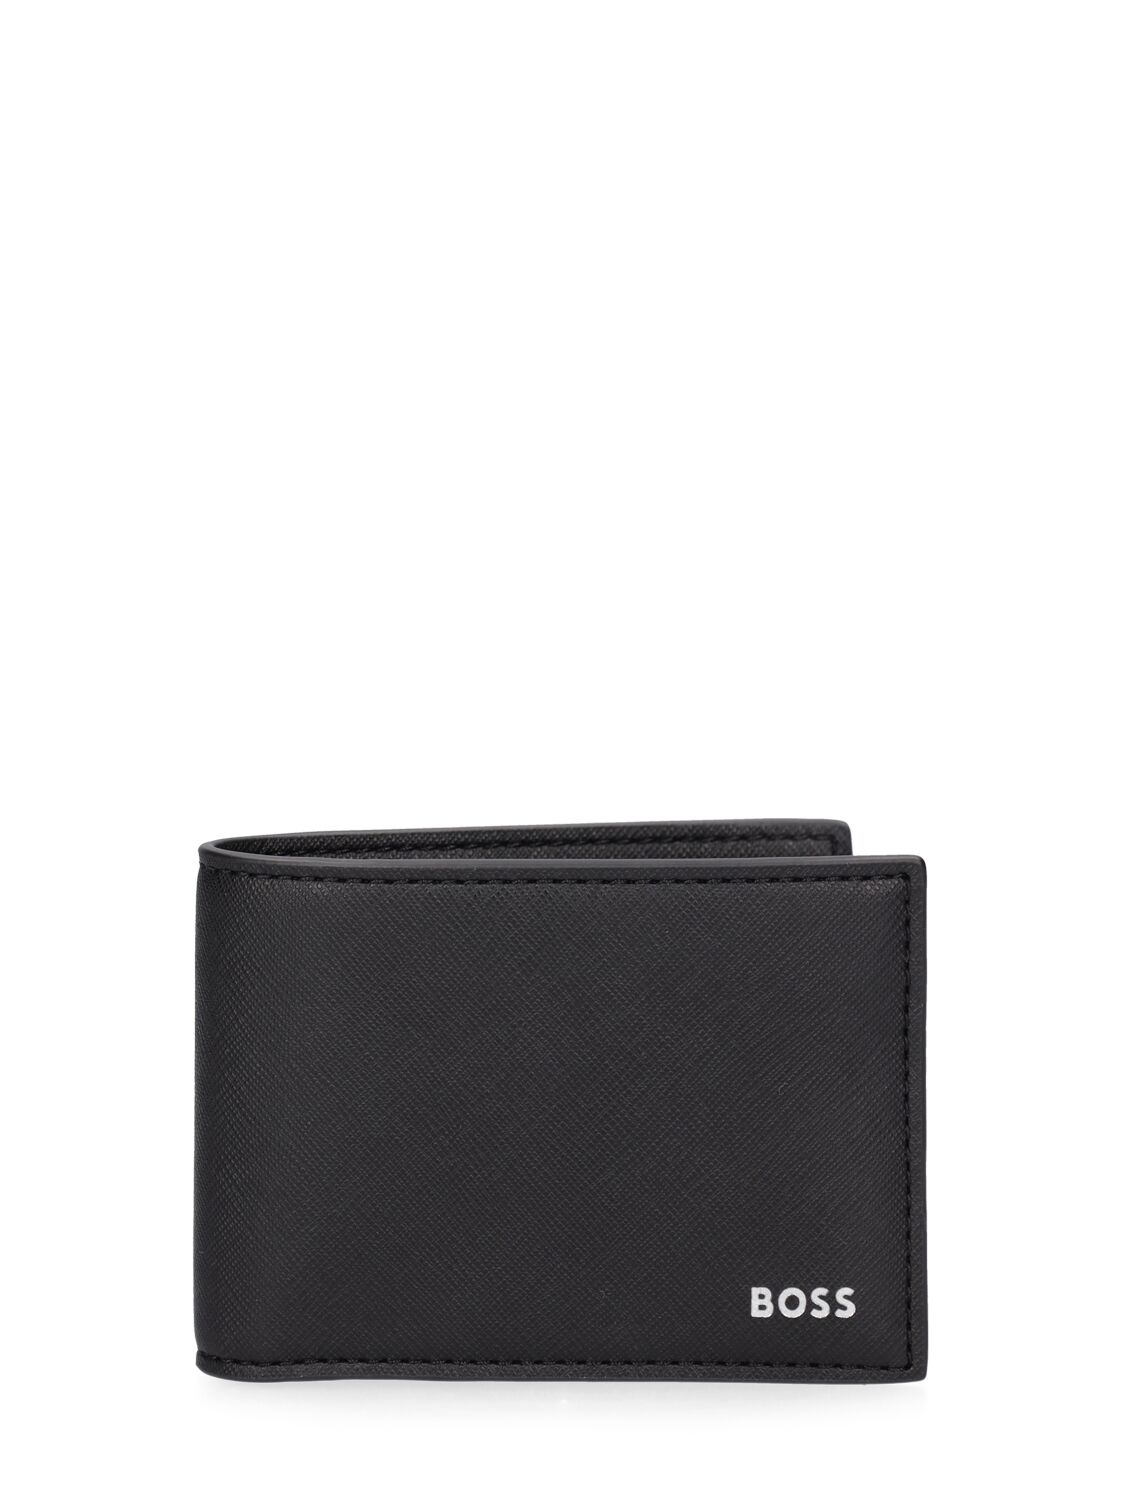 Image of Zain Leather Billfold Wallet